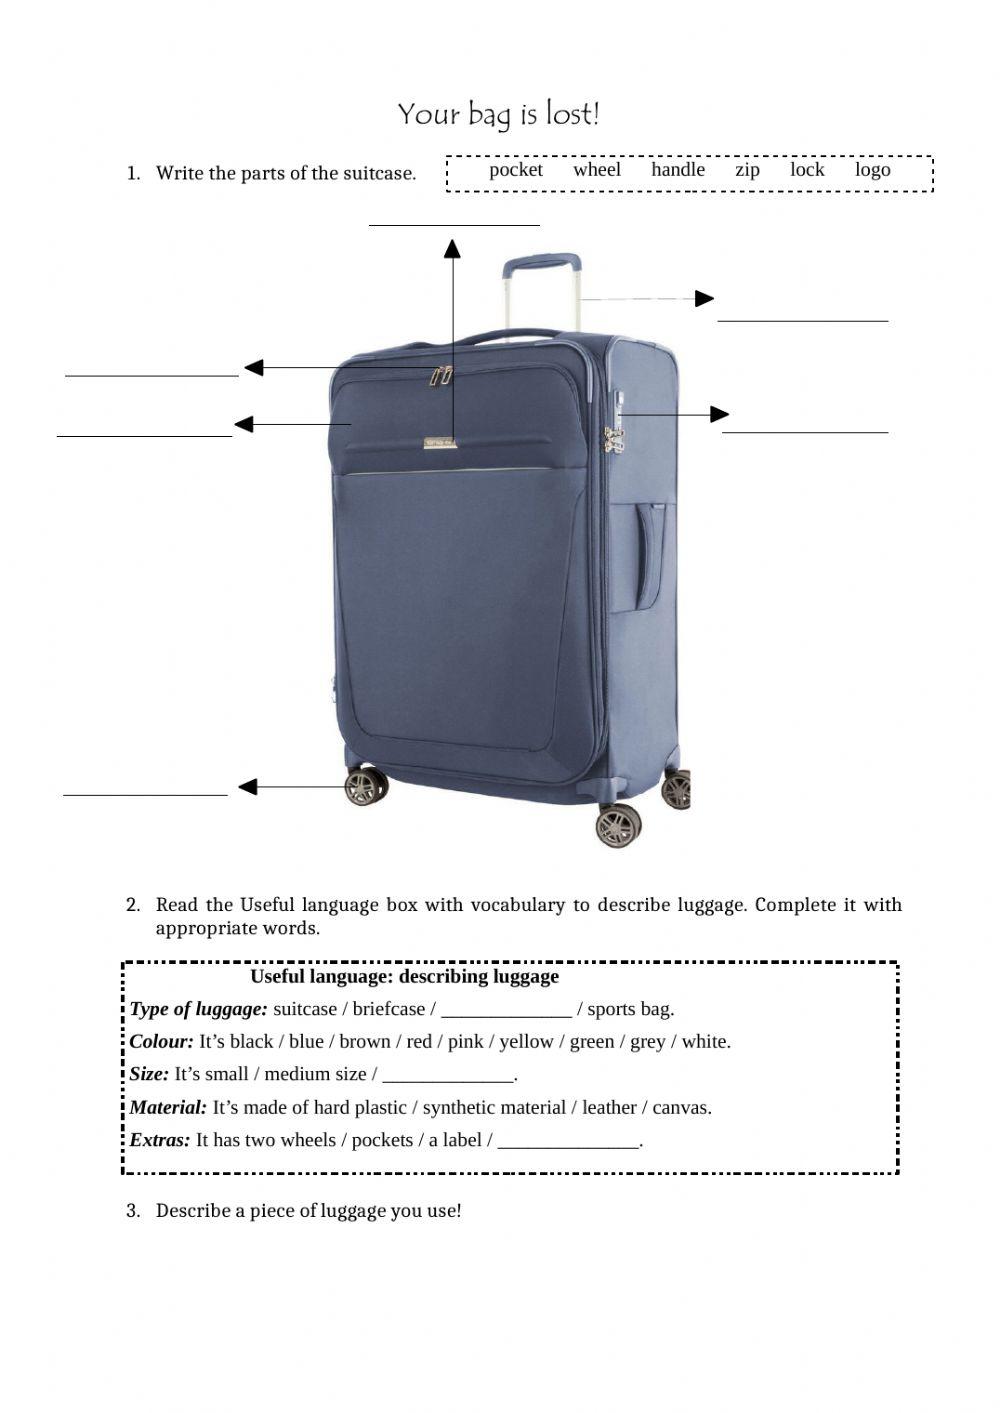 Describe your suitcase